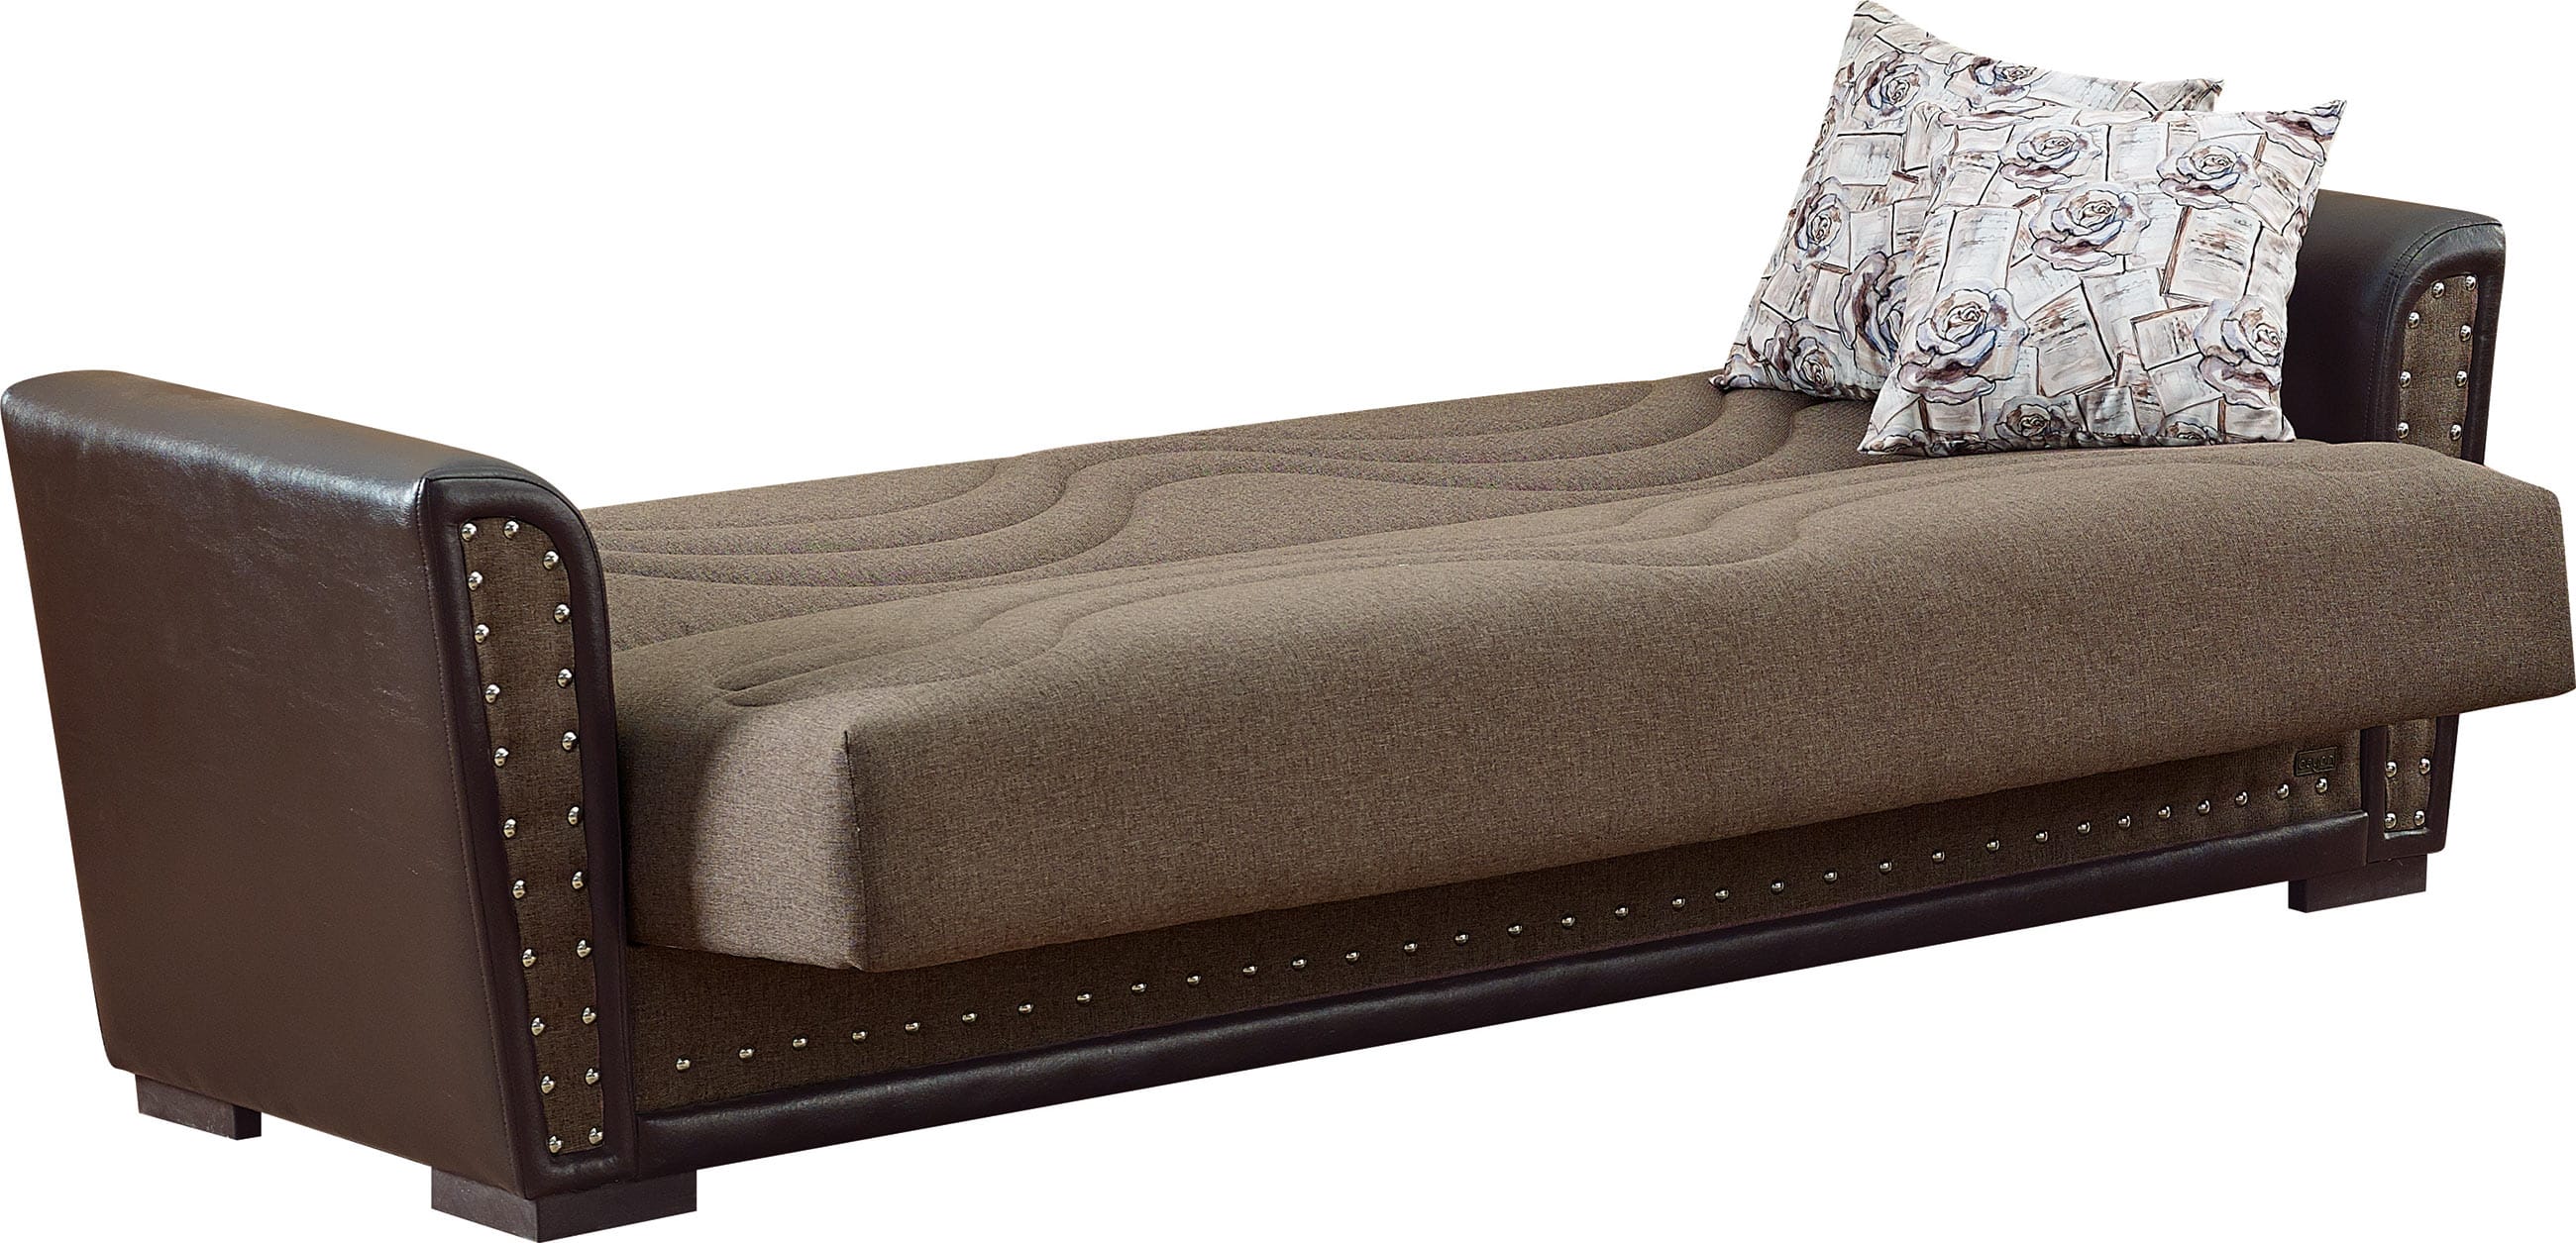 custom sofa bed toronto